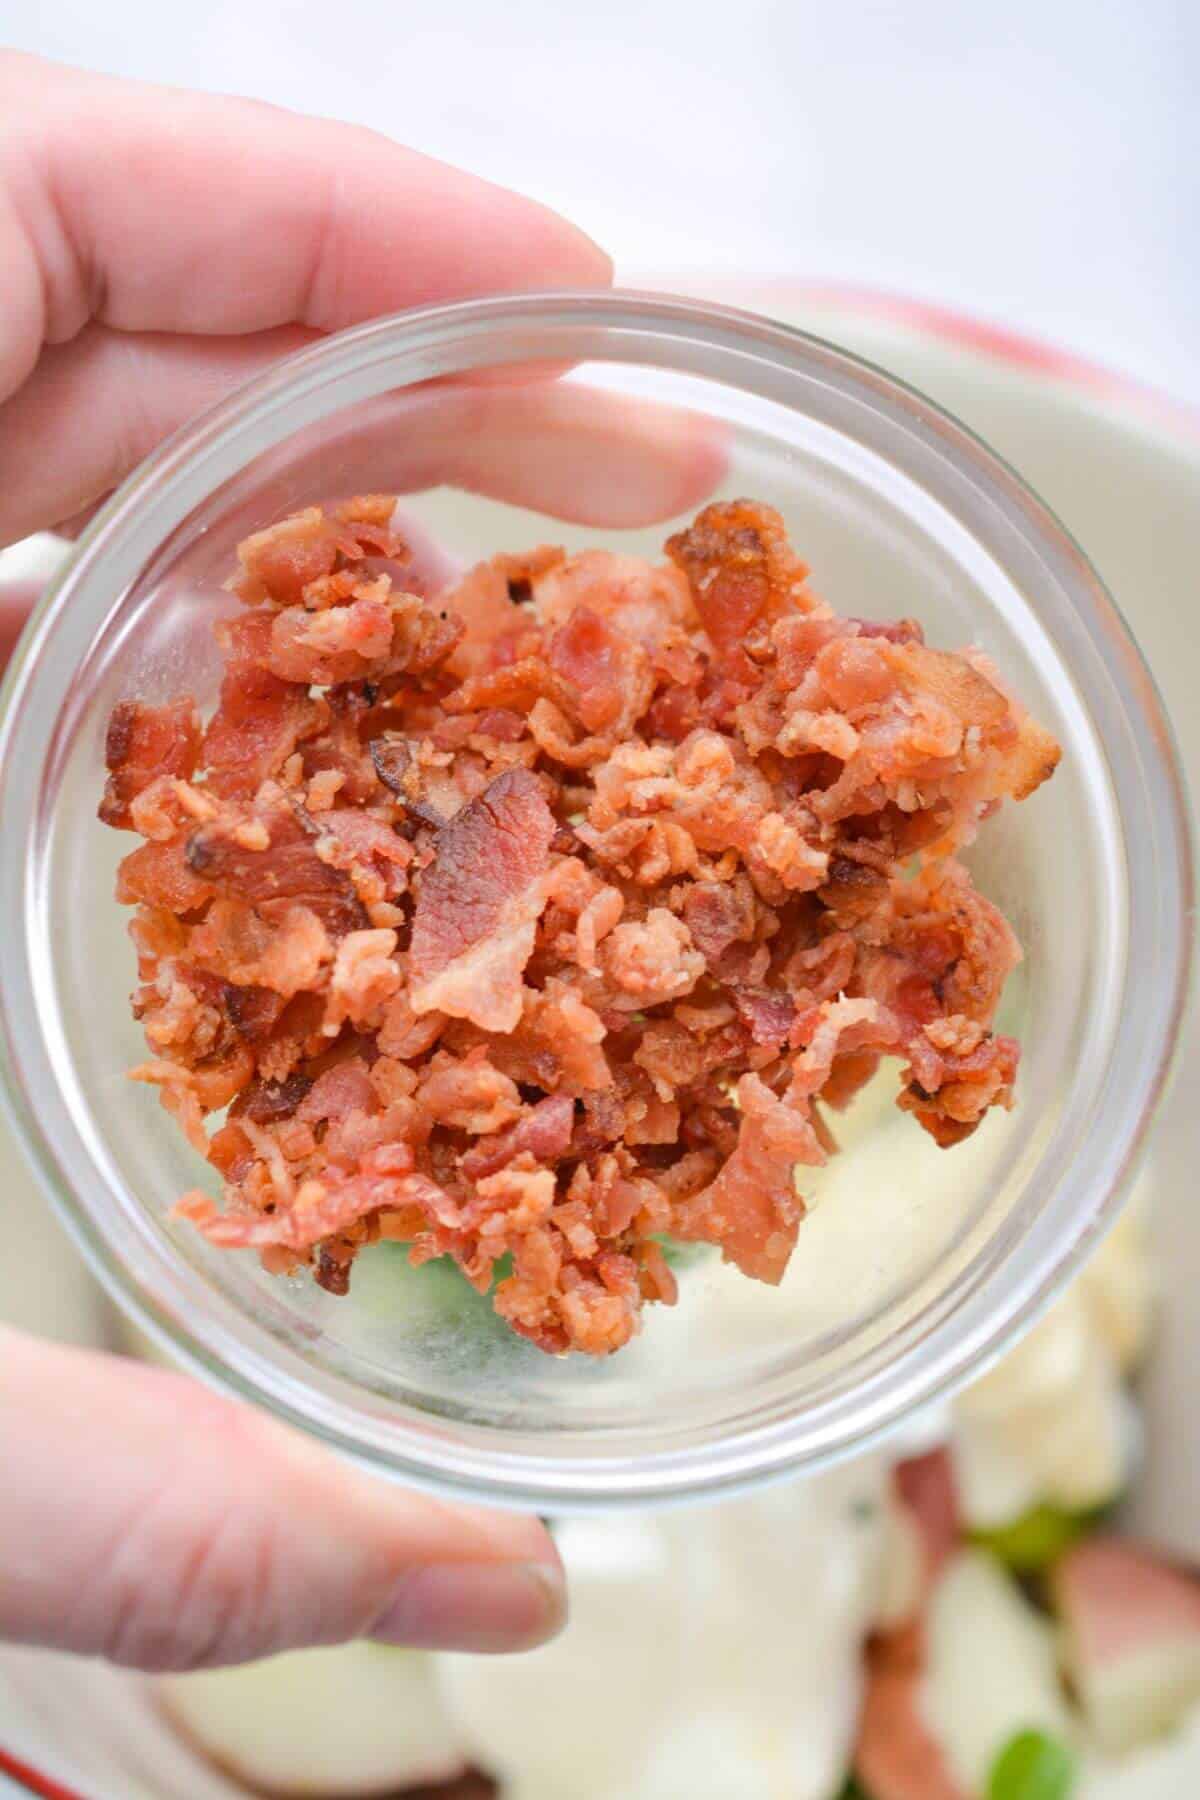 Adding chopped bacon to the red skin potato salad.